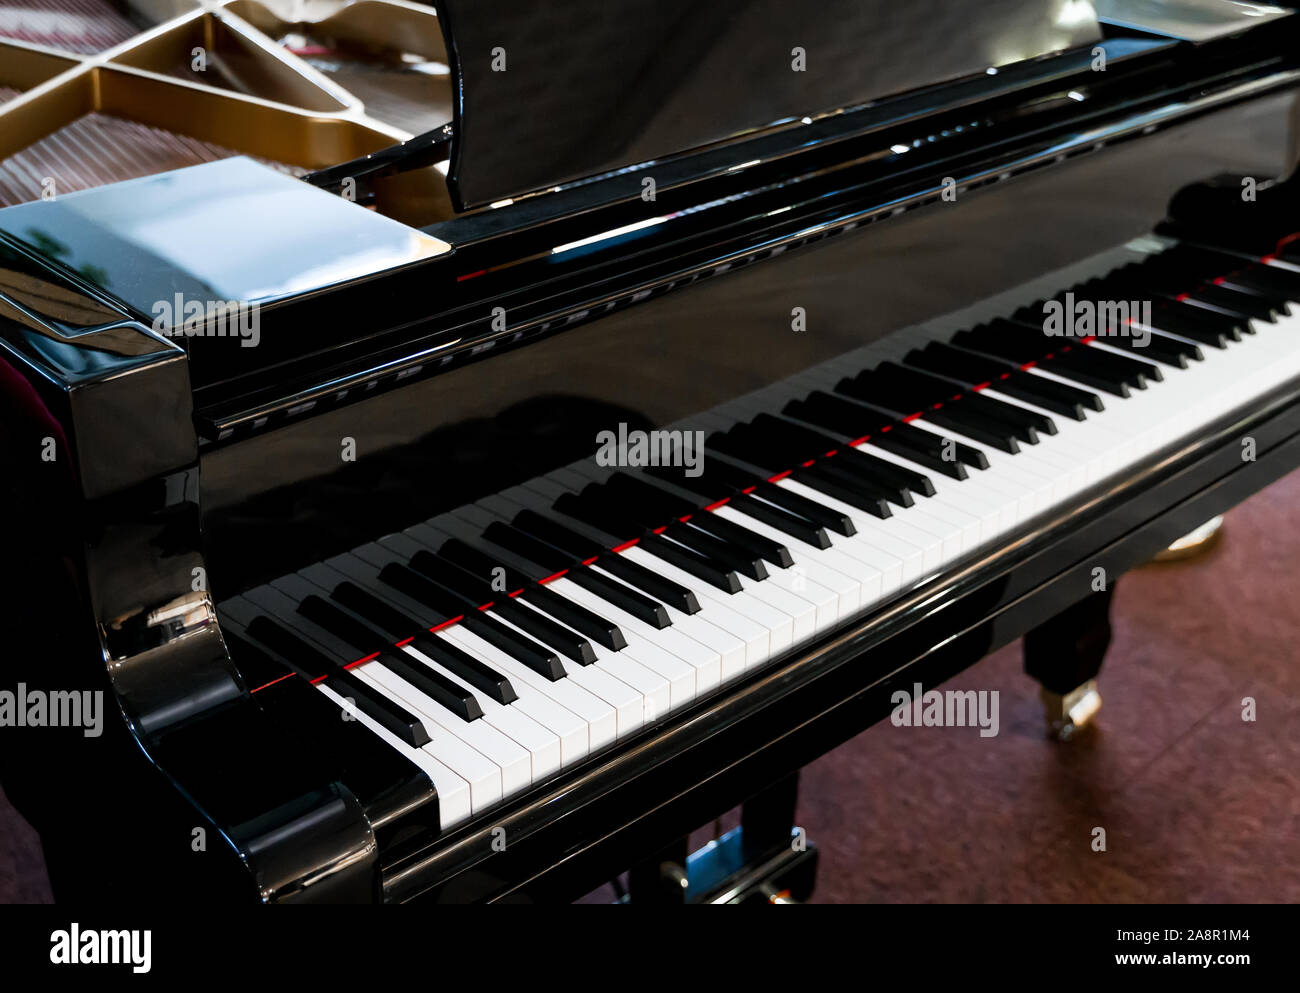 Close-up view of royal grand piano keys Stock Photo - Alamy